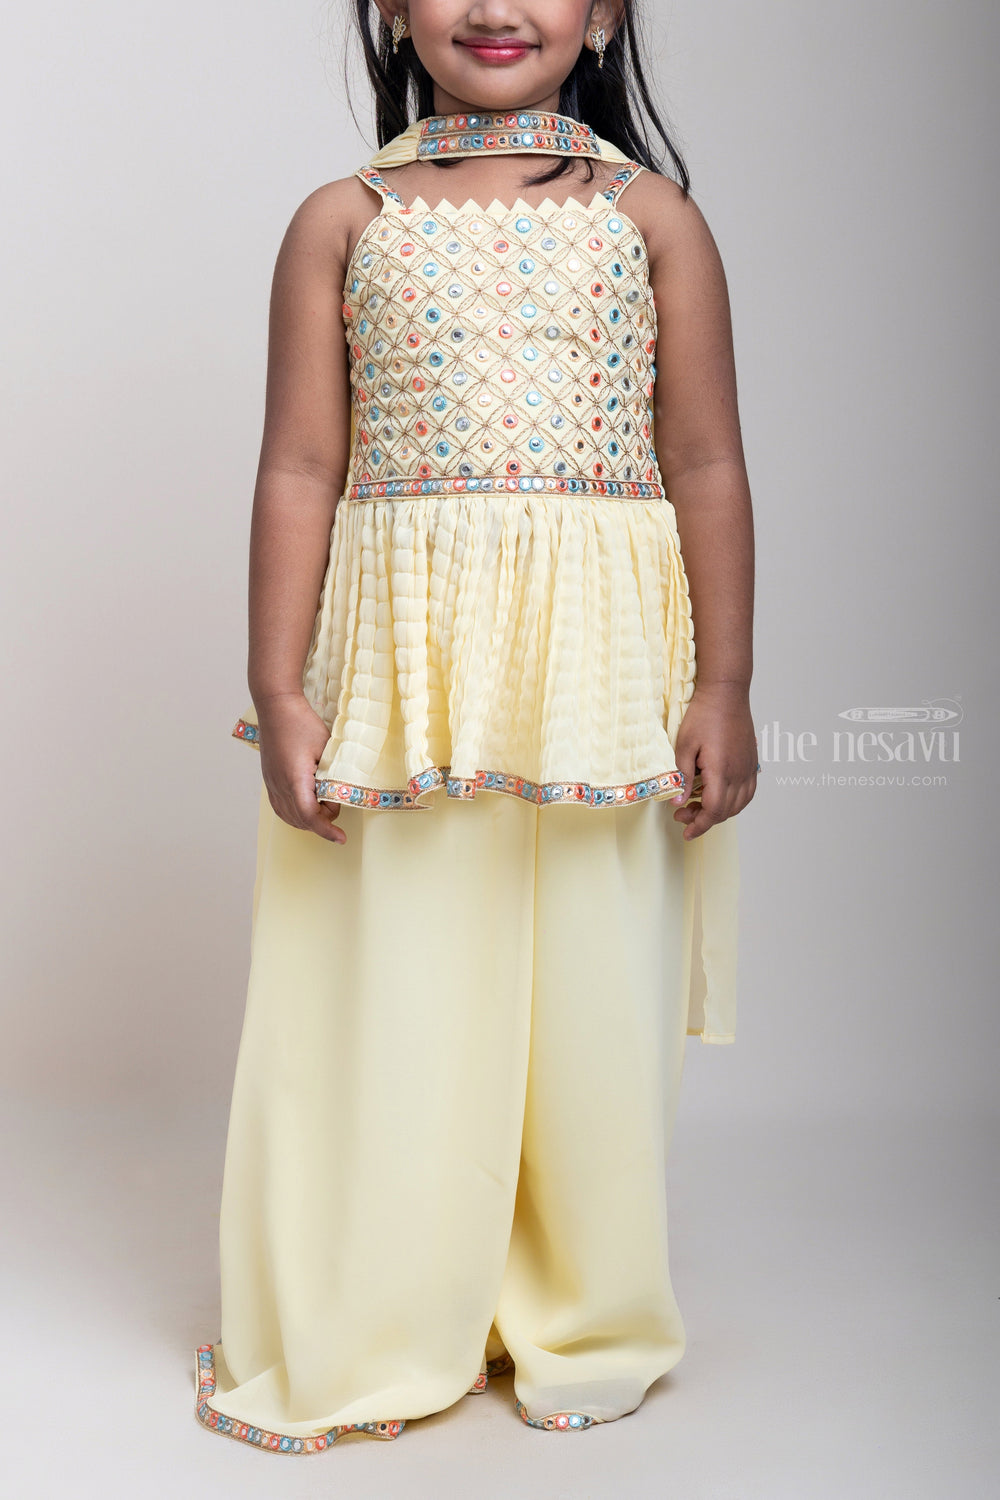 The Nesavu Girls Sharara / Plazo Set Yellow Embroidery Sequin Tunic Tops With Palazzo For Girls psr silks Nesavu